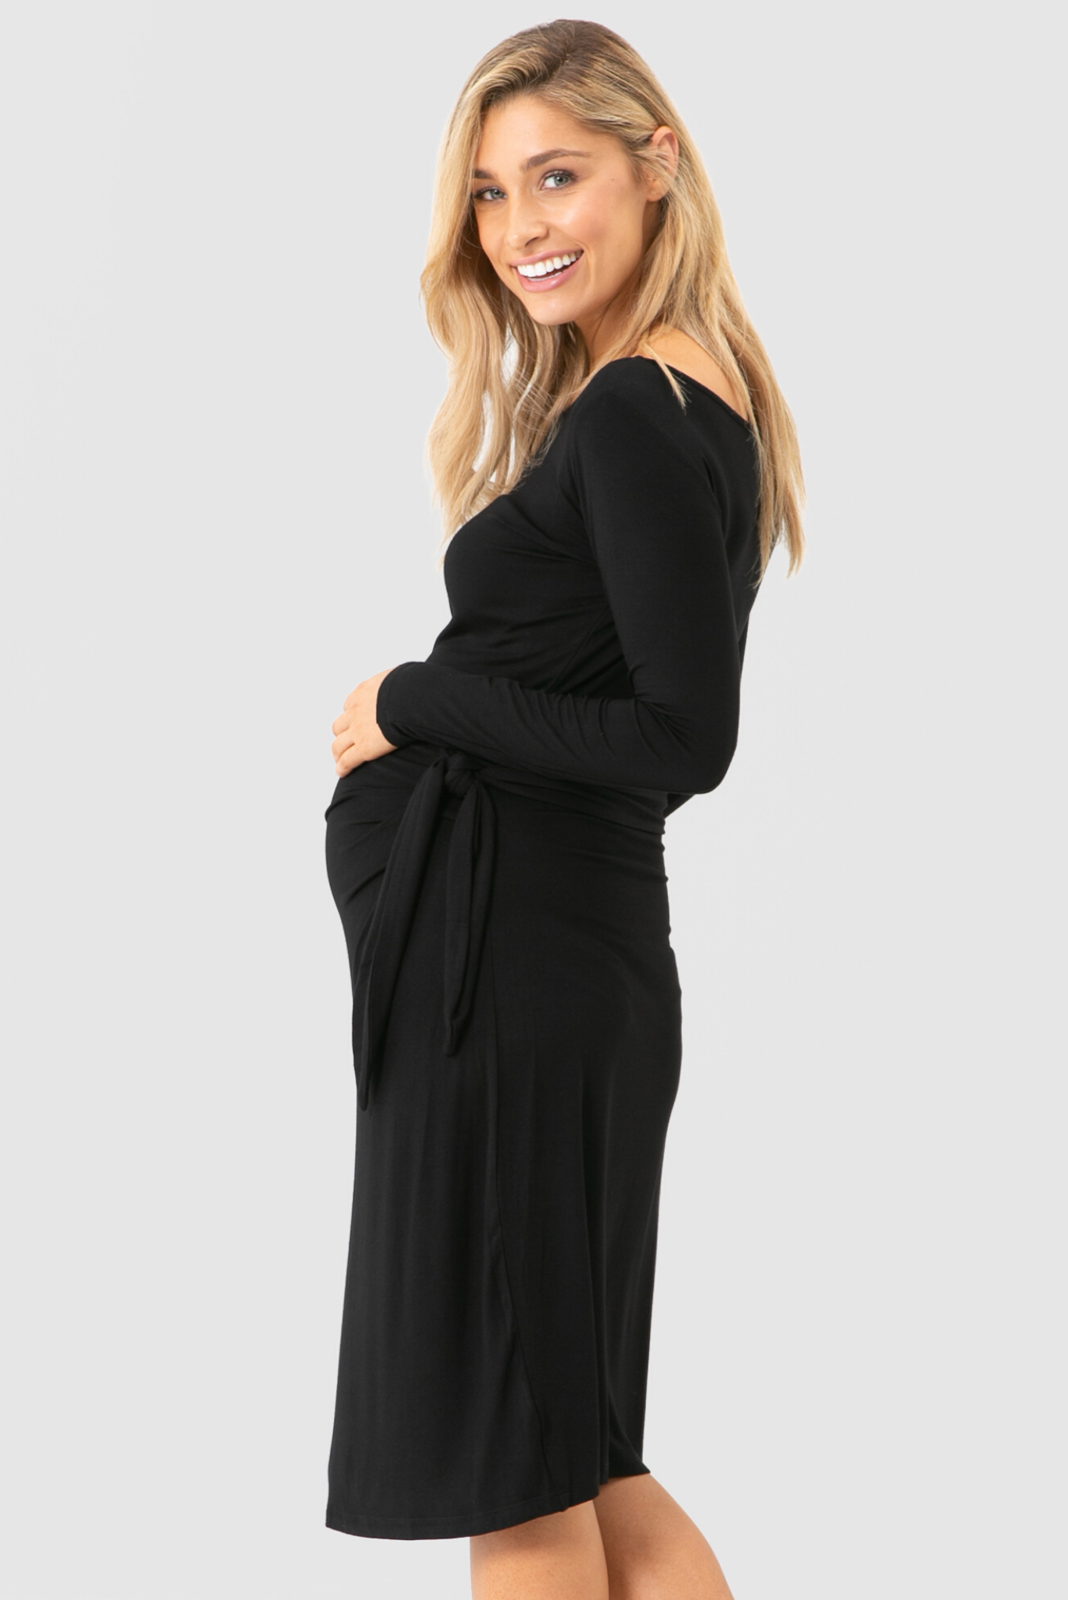 Organic Bamboo Audrey Maternity Dress  from Bamboo Body maternity online store brisbane sydney perth australia